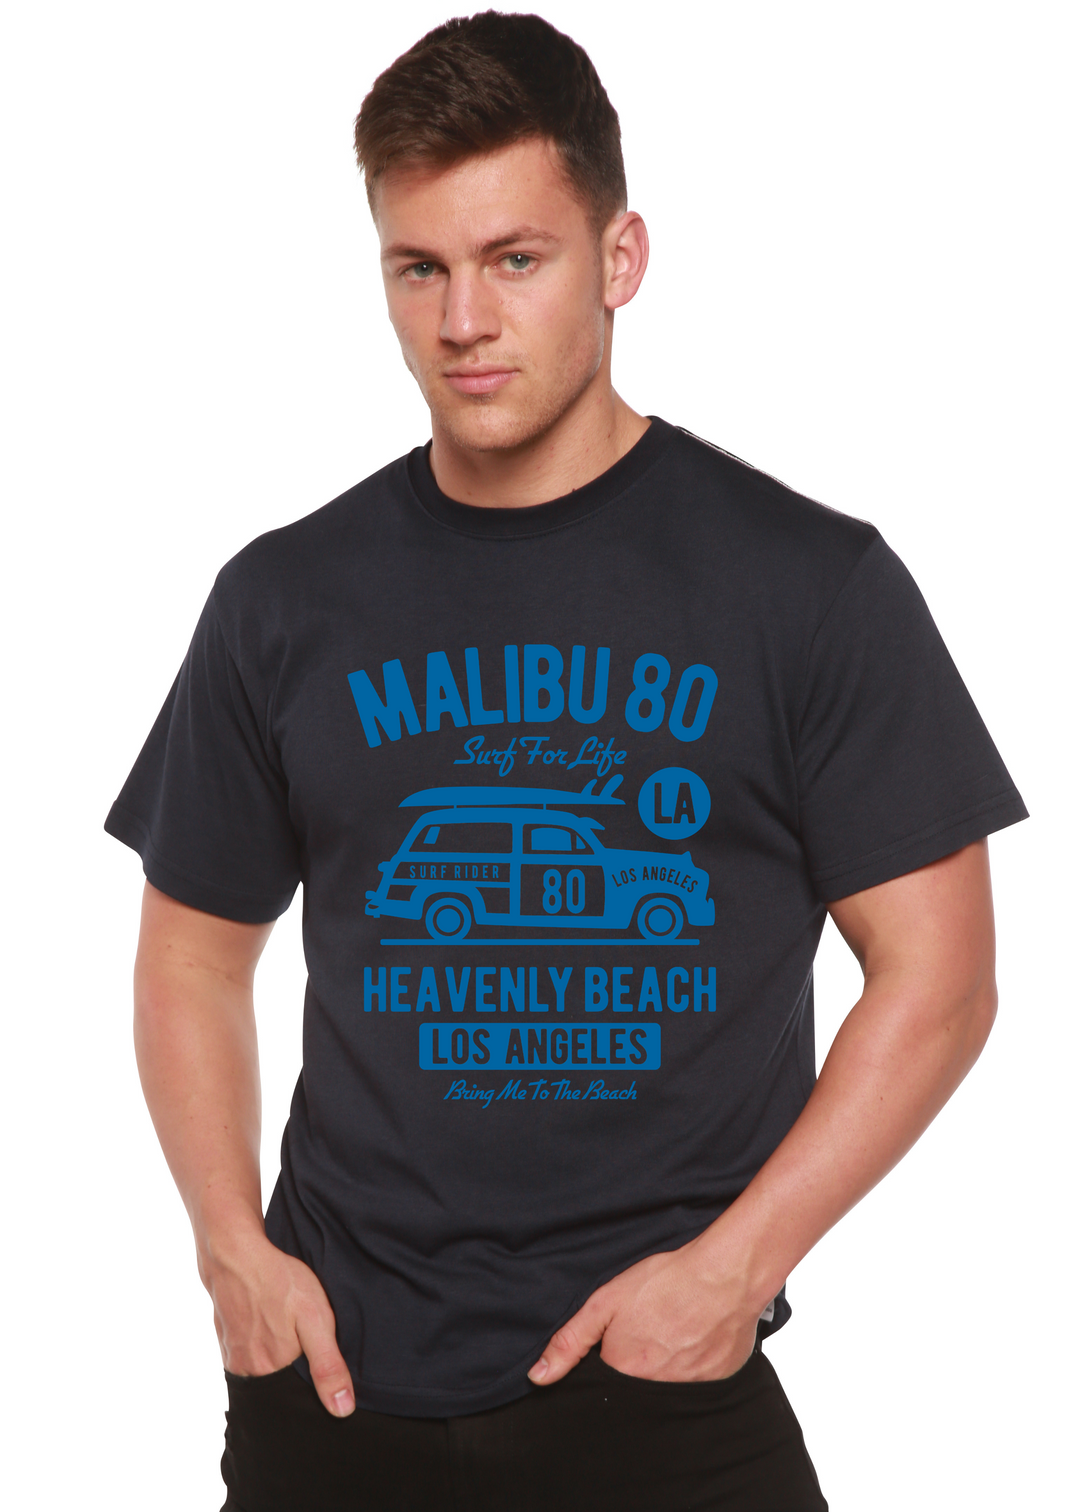 Malibu 80 men's bamboo tshirt navy blue